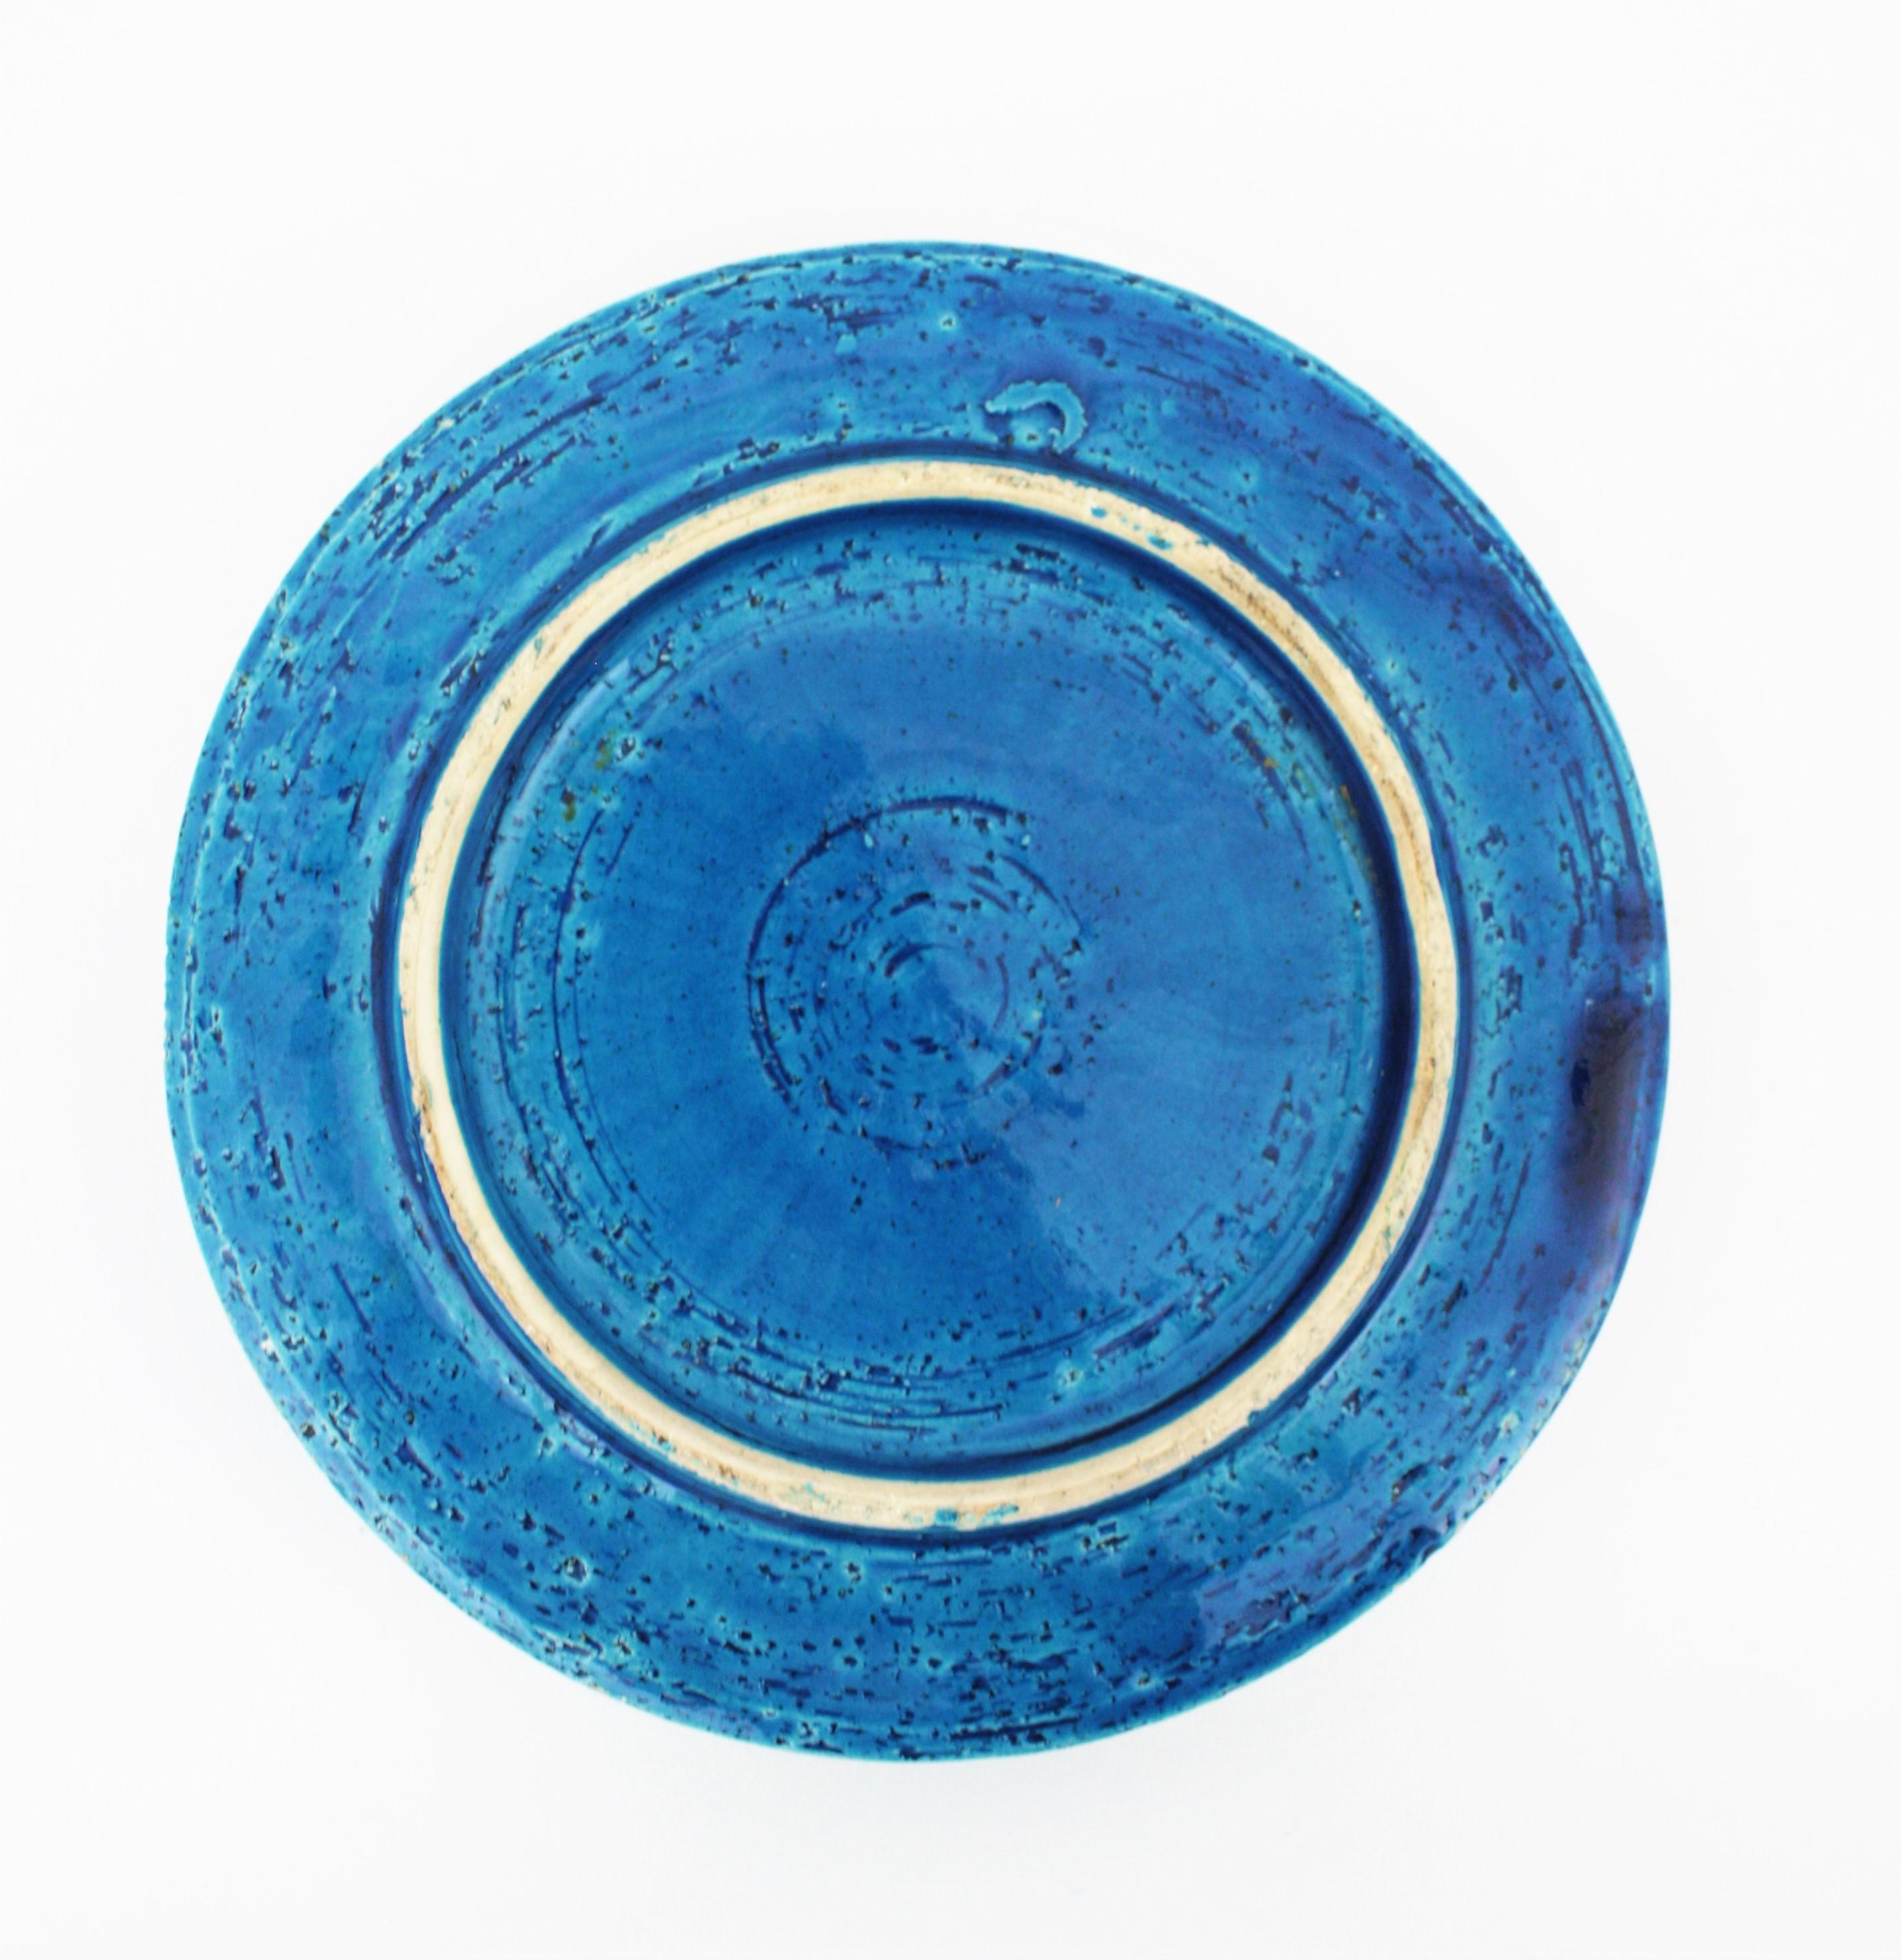 Glazed Aldo Londi Bitossi Rimini Blu Ceramic Round Bowl, 1950s For Sale